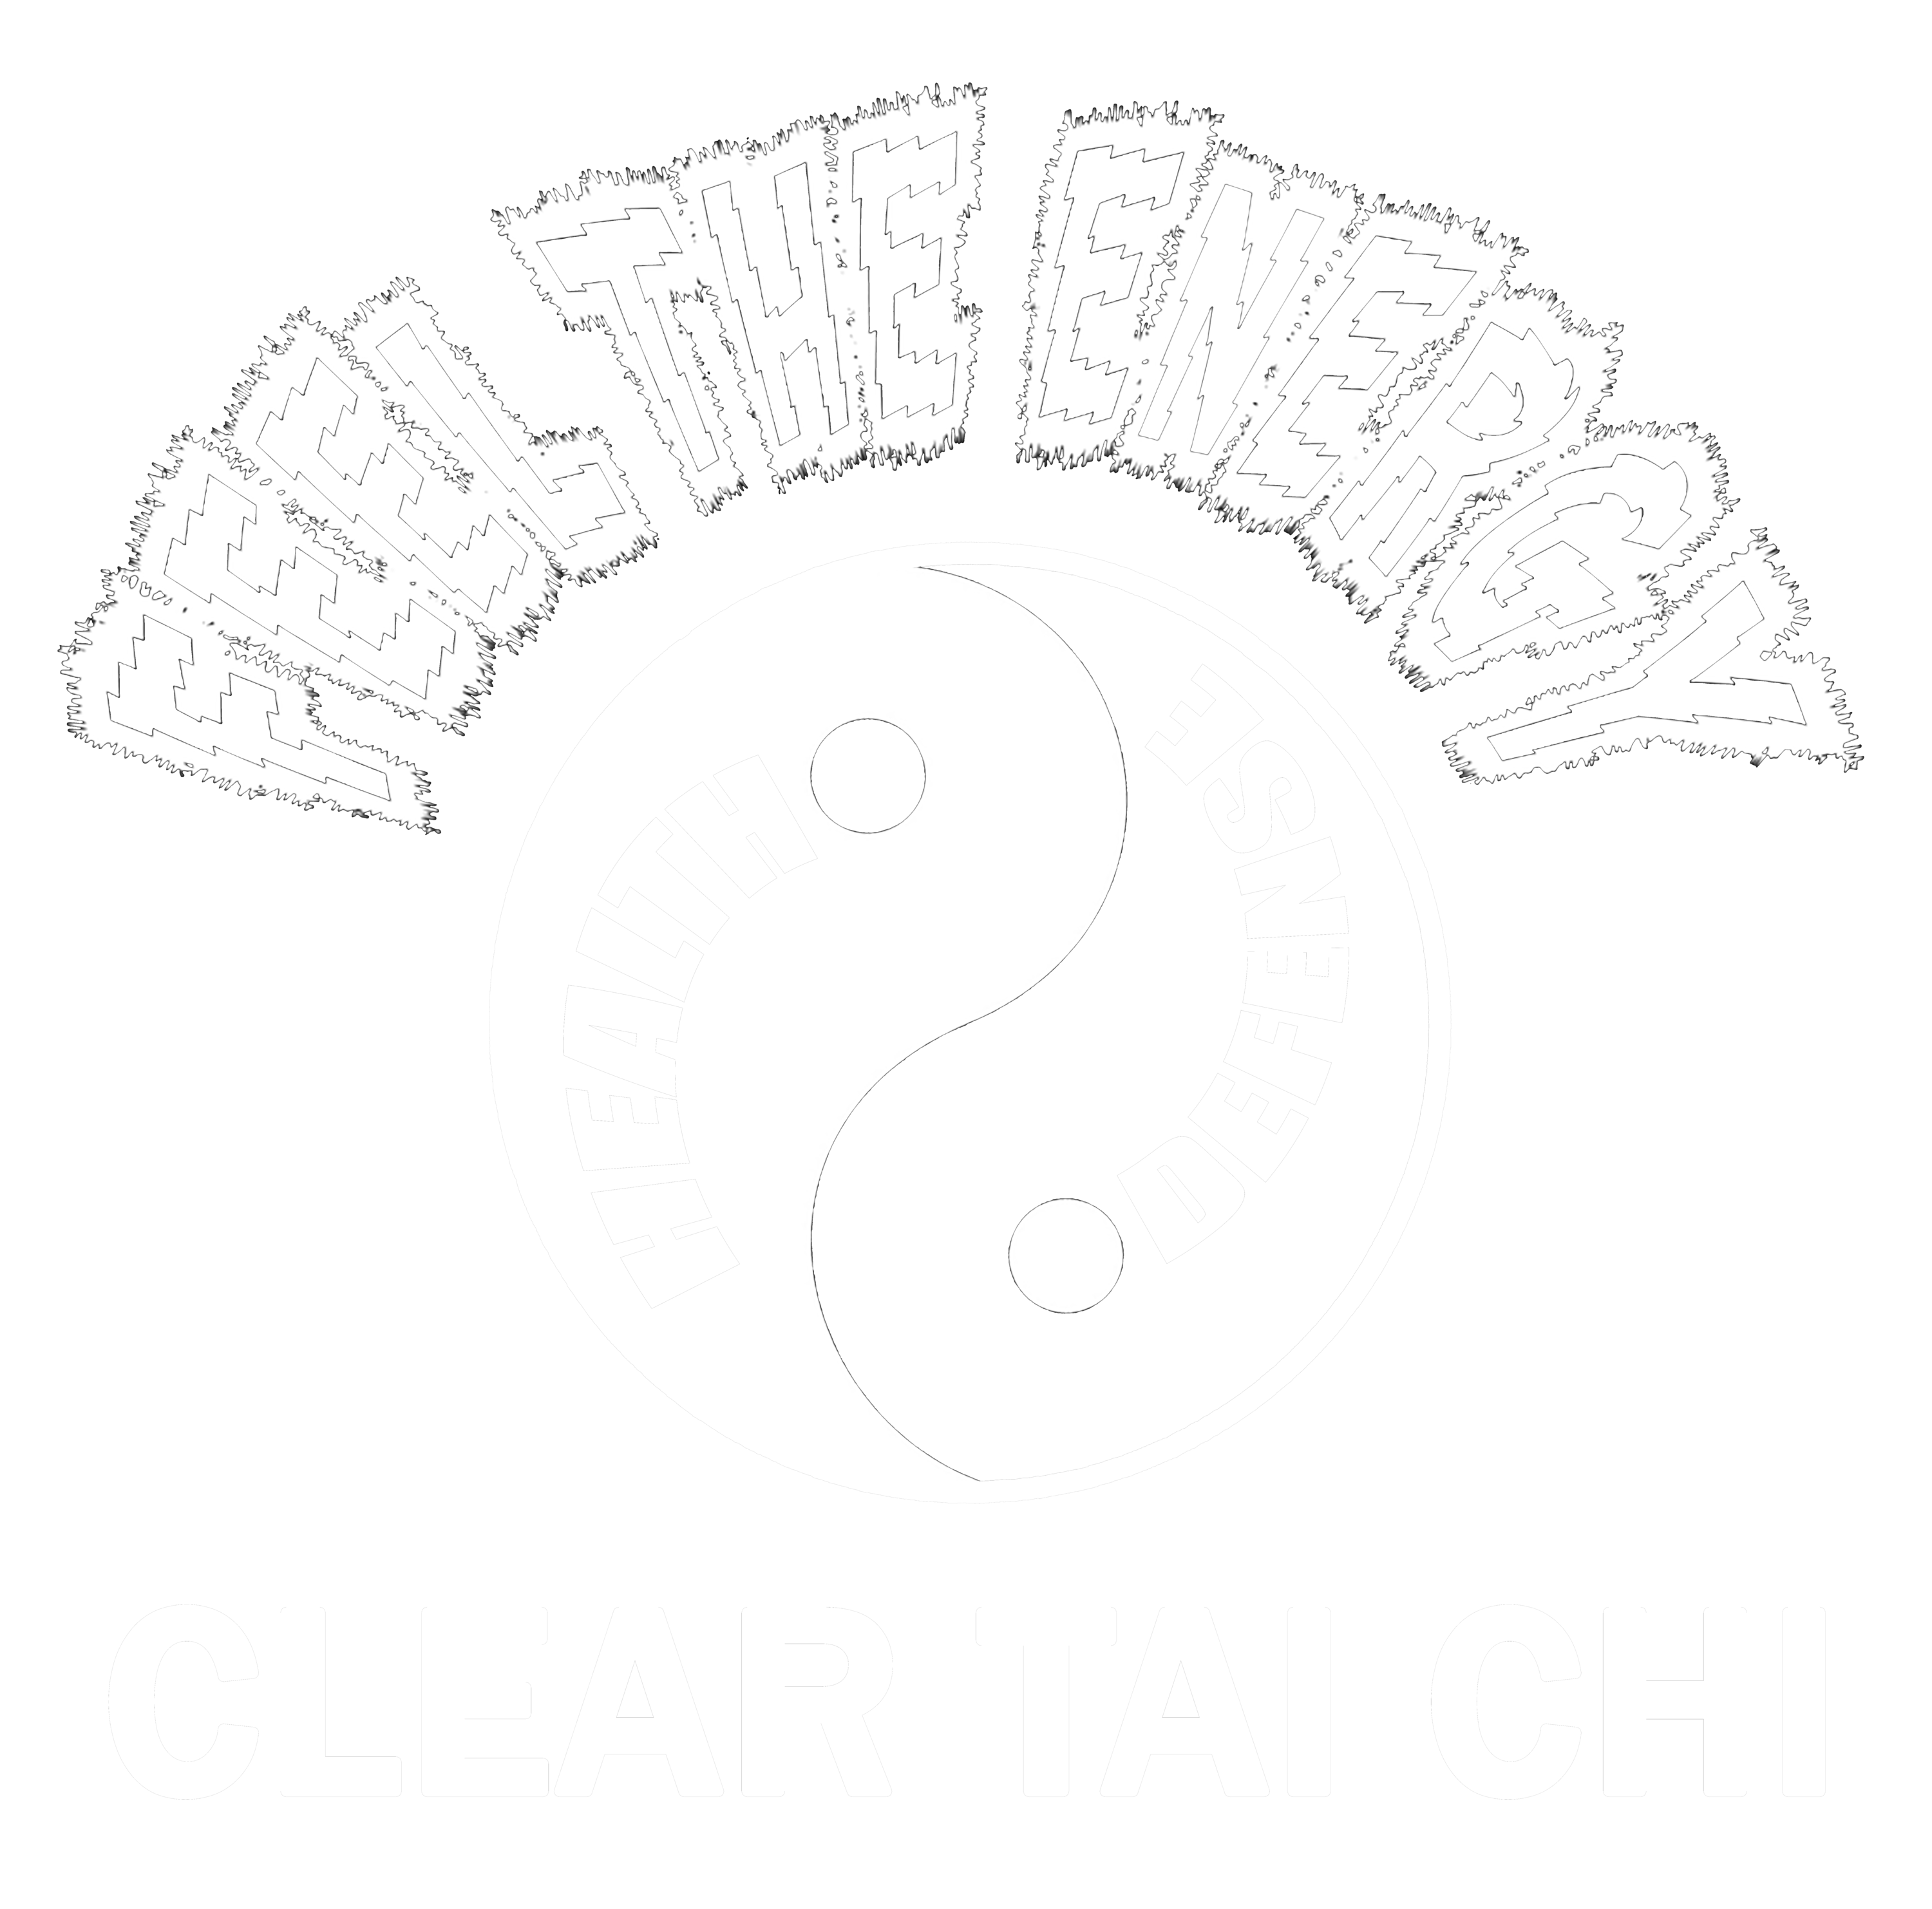 Clear's Tai Chi